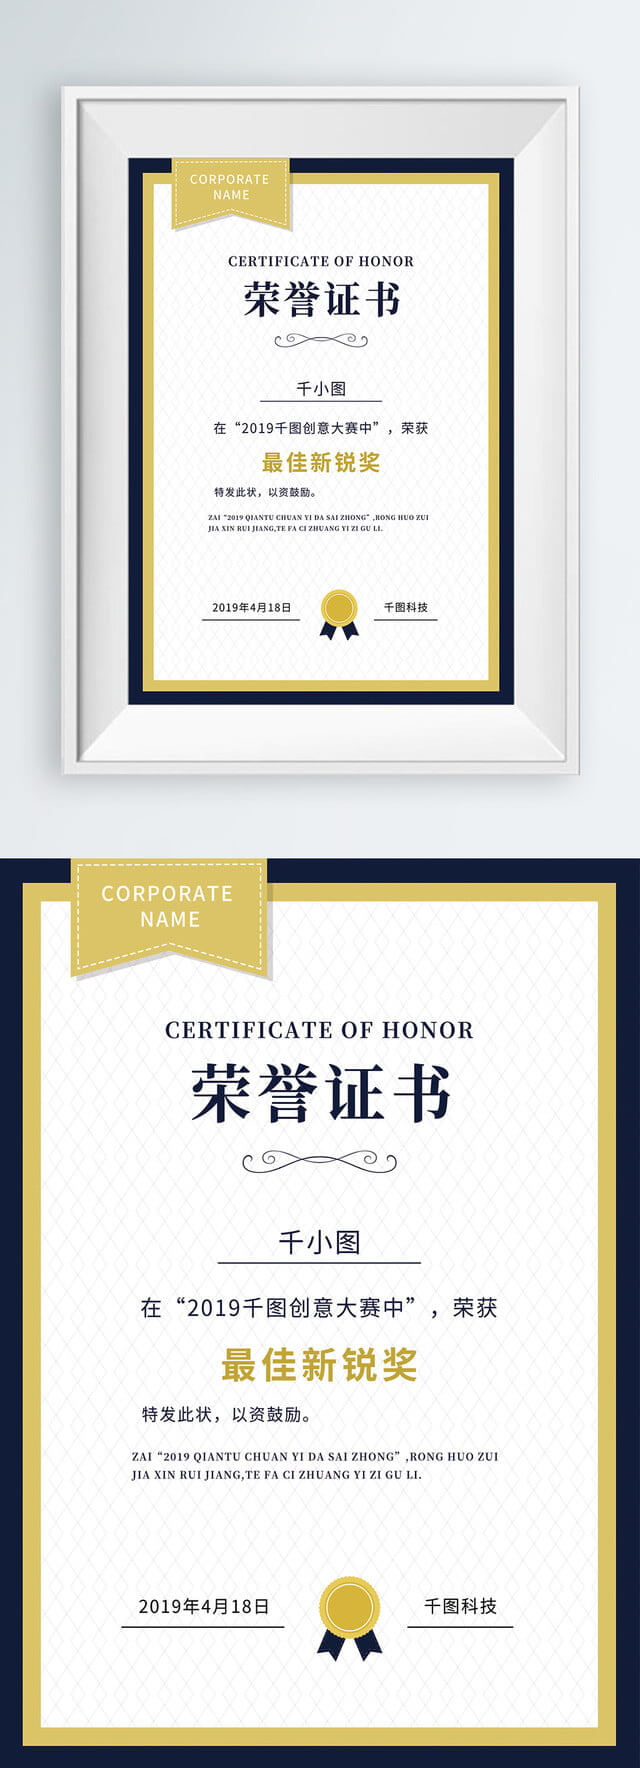 Certificate Authorization Certificate Certificate Of Honor In Certificate Of Authorization Template